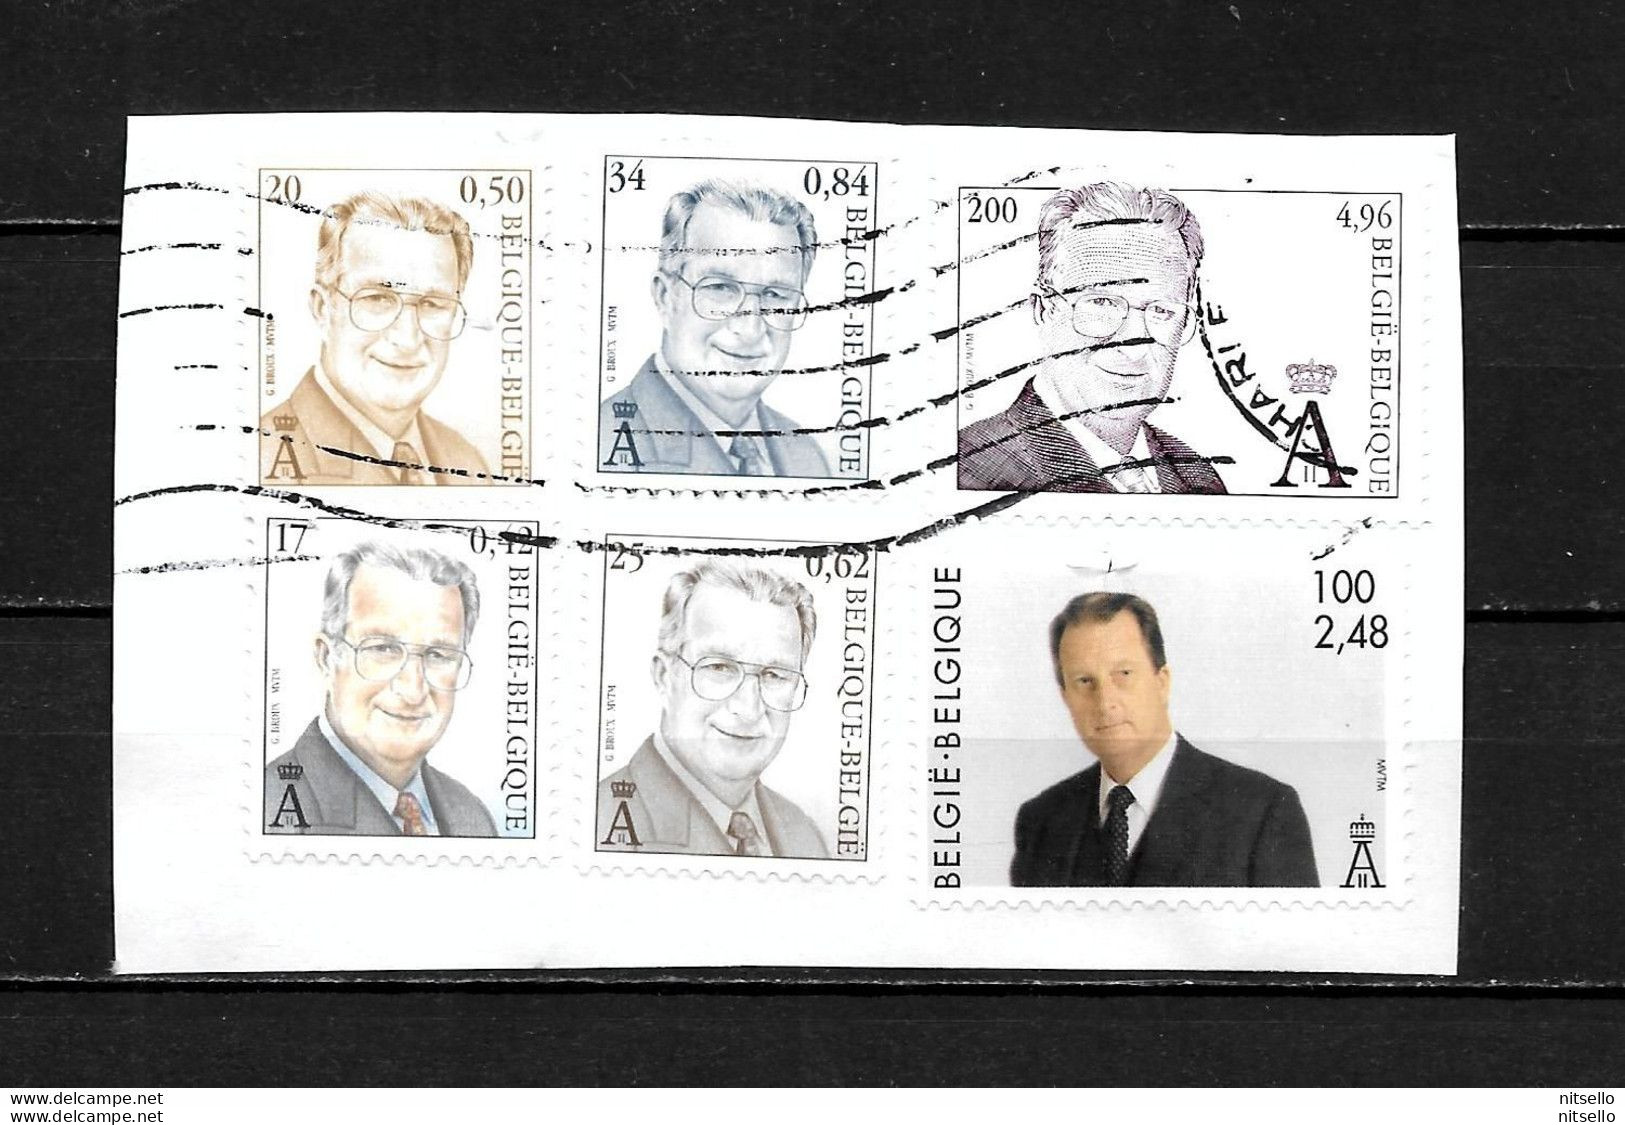 LOTE 1668  ///    BELGICA FRANQUEO ACTUAL - ¡¡¡ OFERTA - LIQUIDATION - JE LIQUIDE !!! - Used Stamps